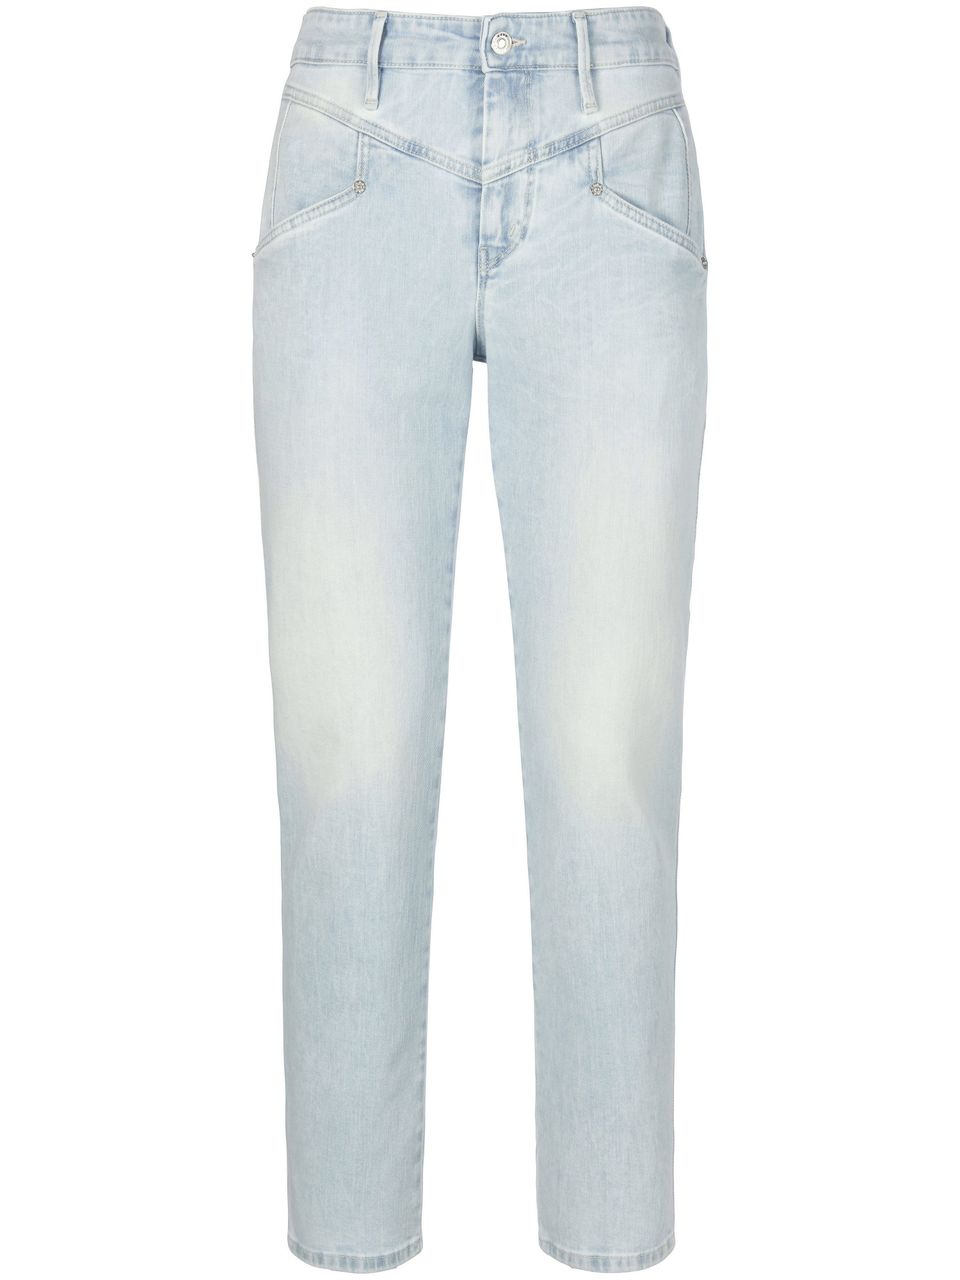 Mac Daydream Jeans denim size: 14 - Compare prices